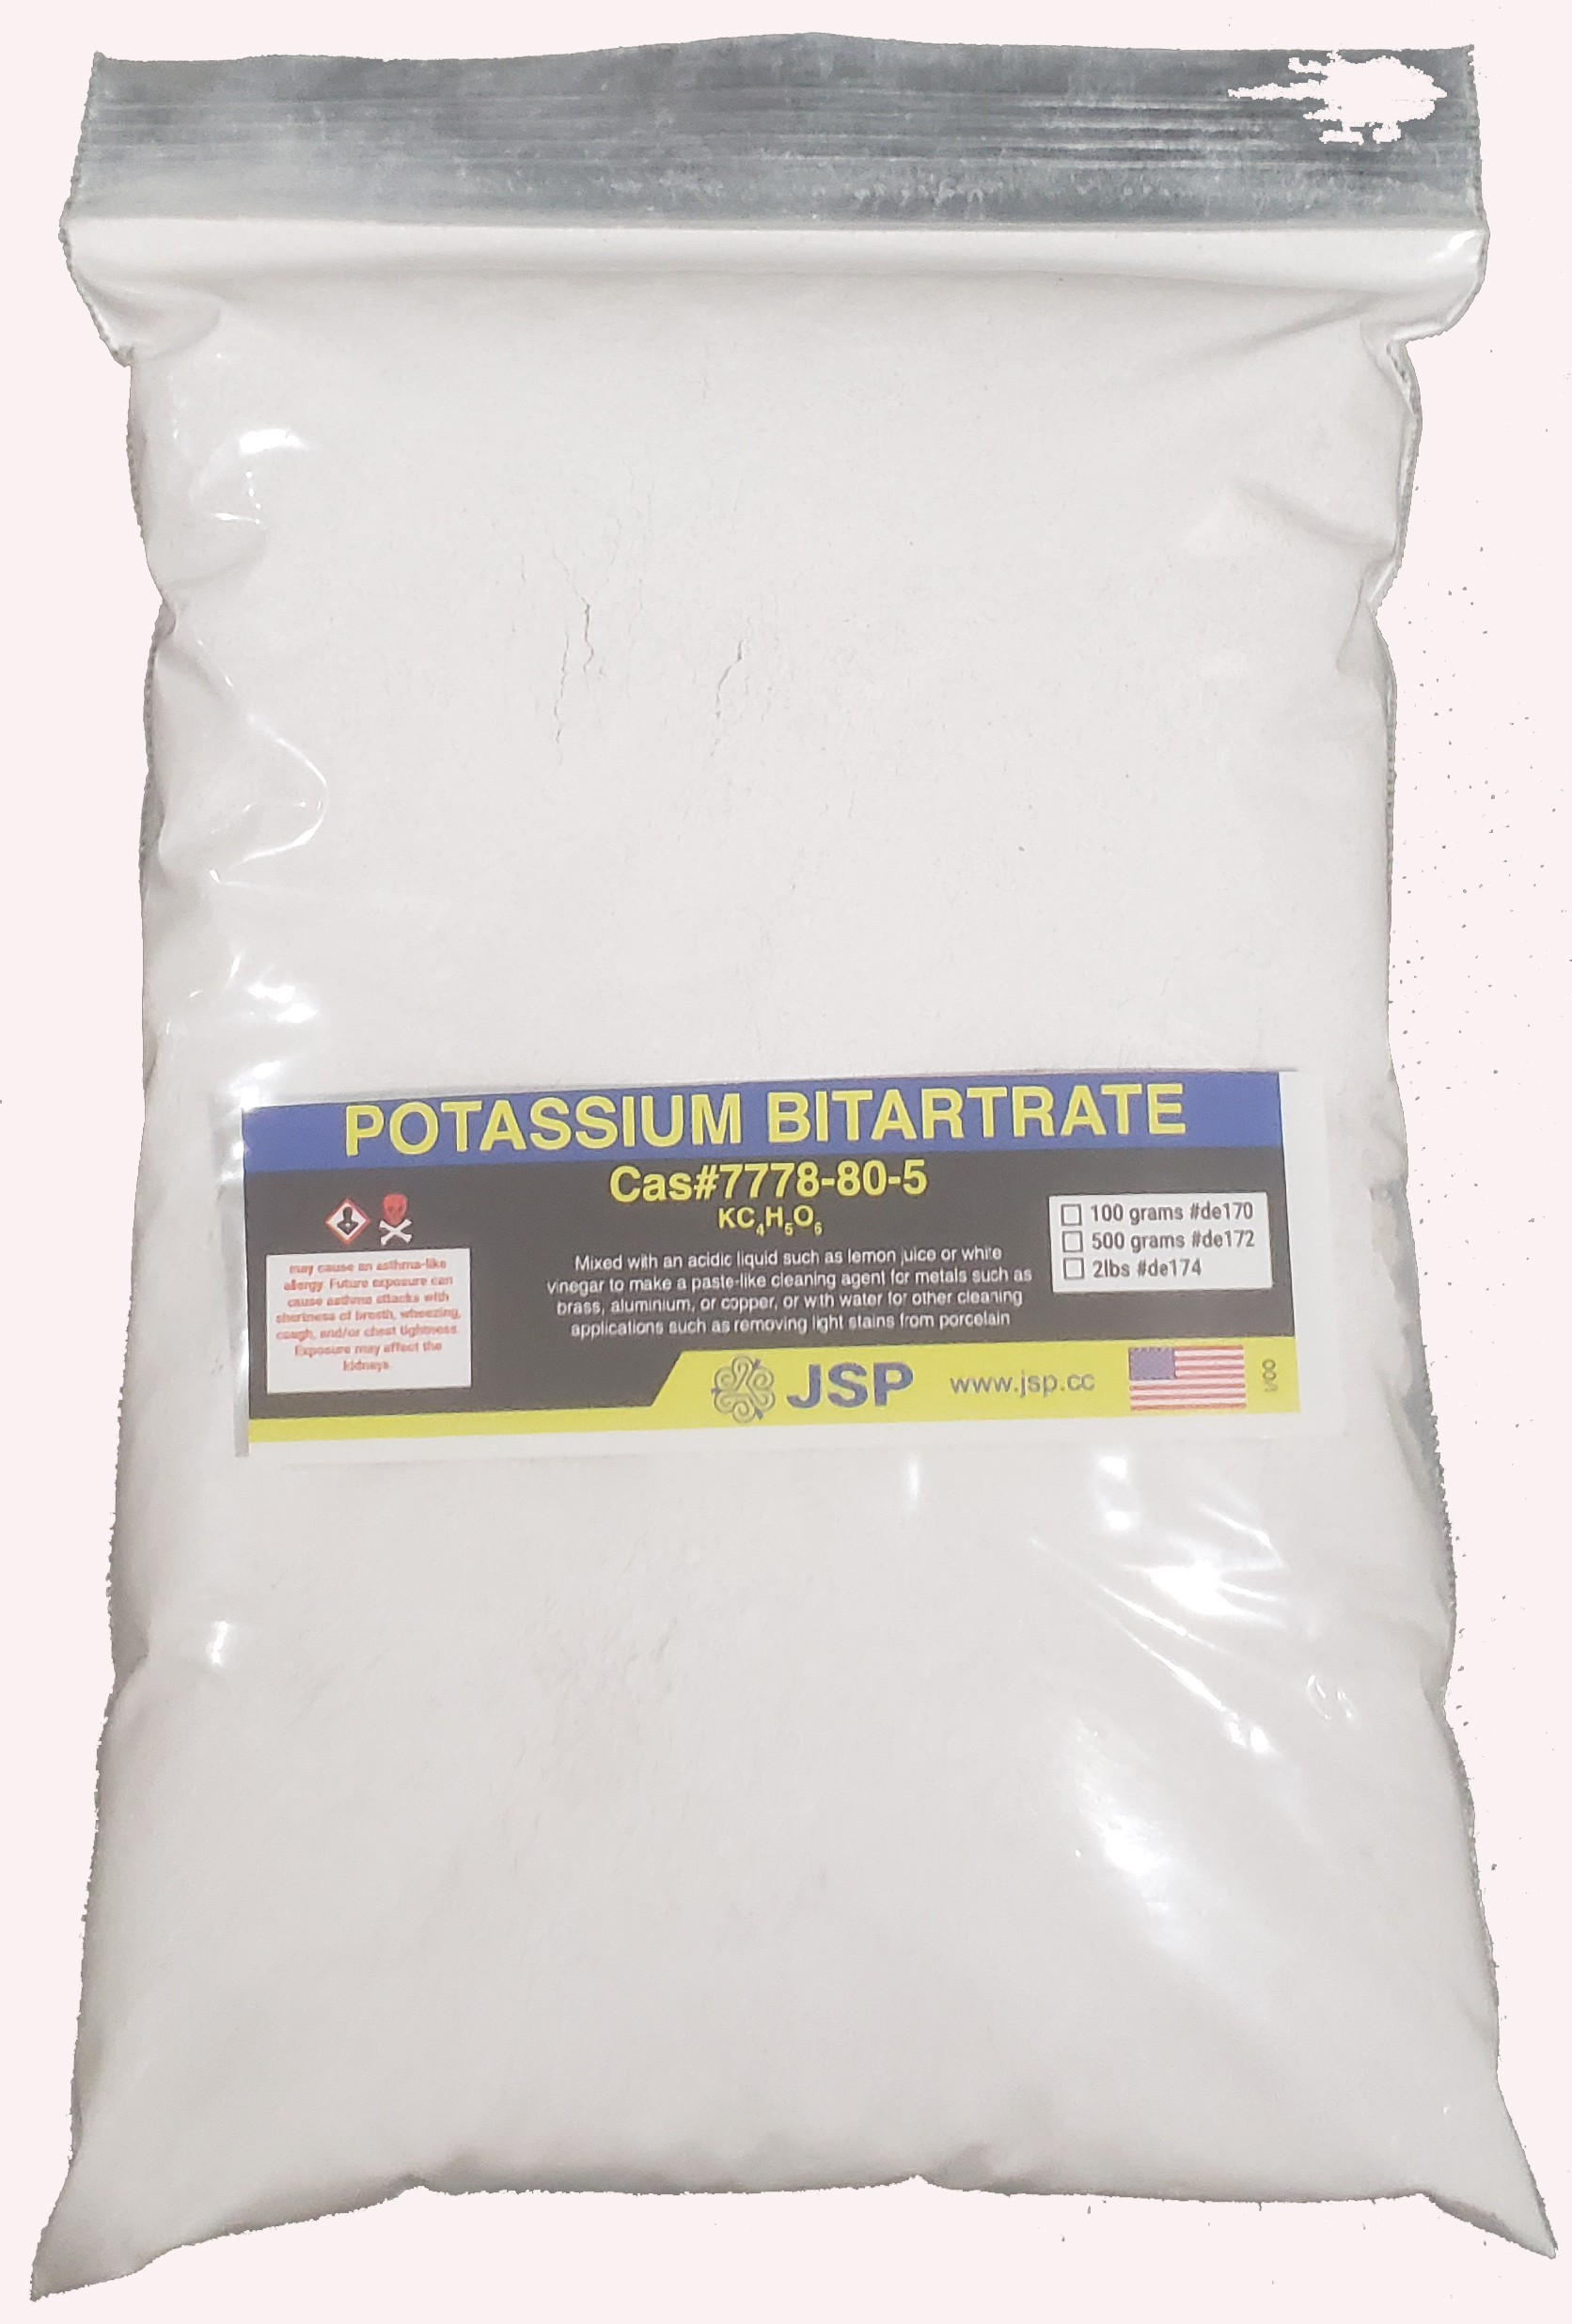 POTASSIUM BITARTRATE 100 grams